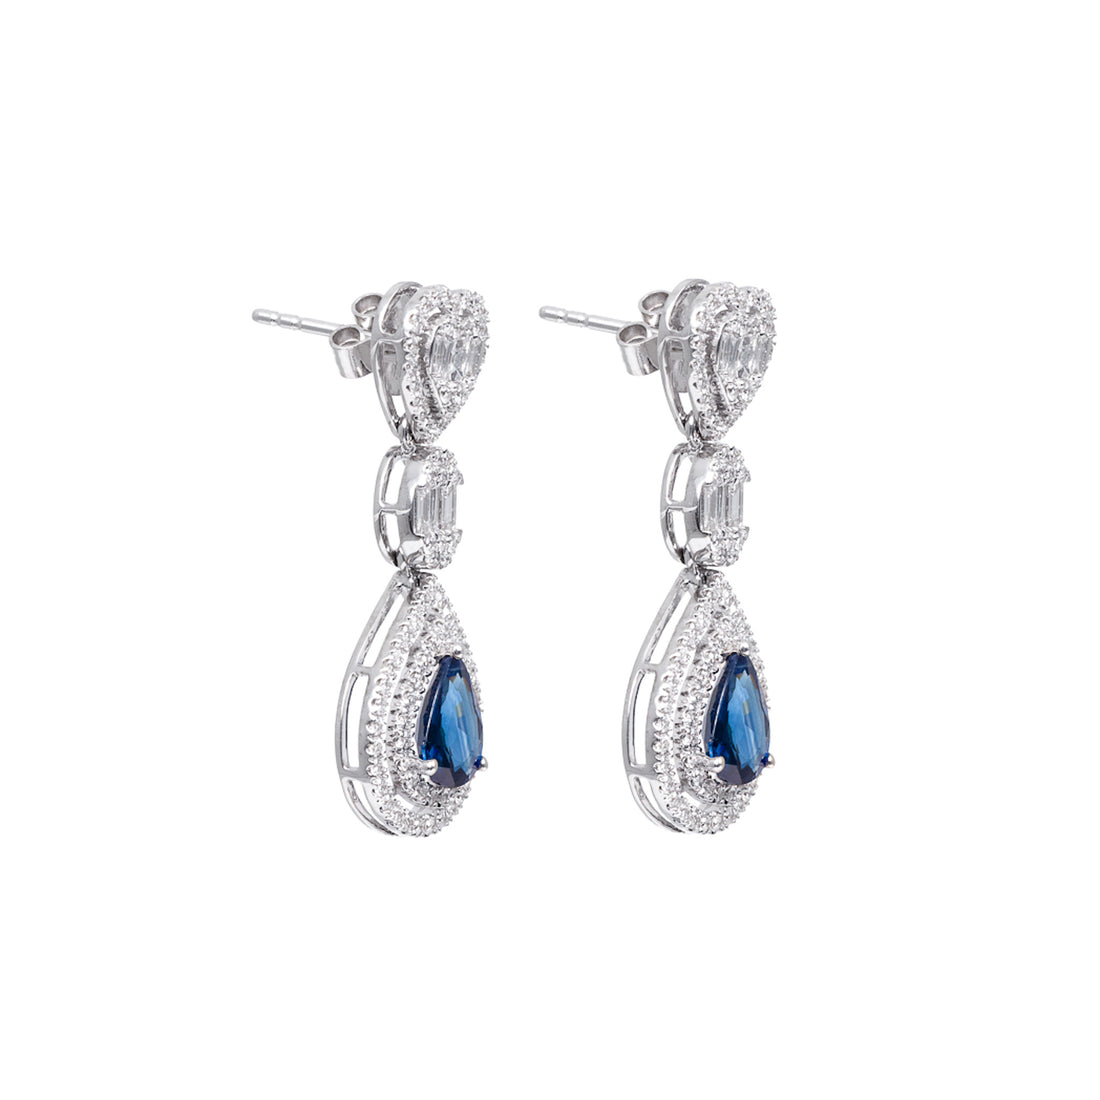 Maison de Joie 18kt White Gold Diamond & Sapphire Drop Style Earrings